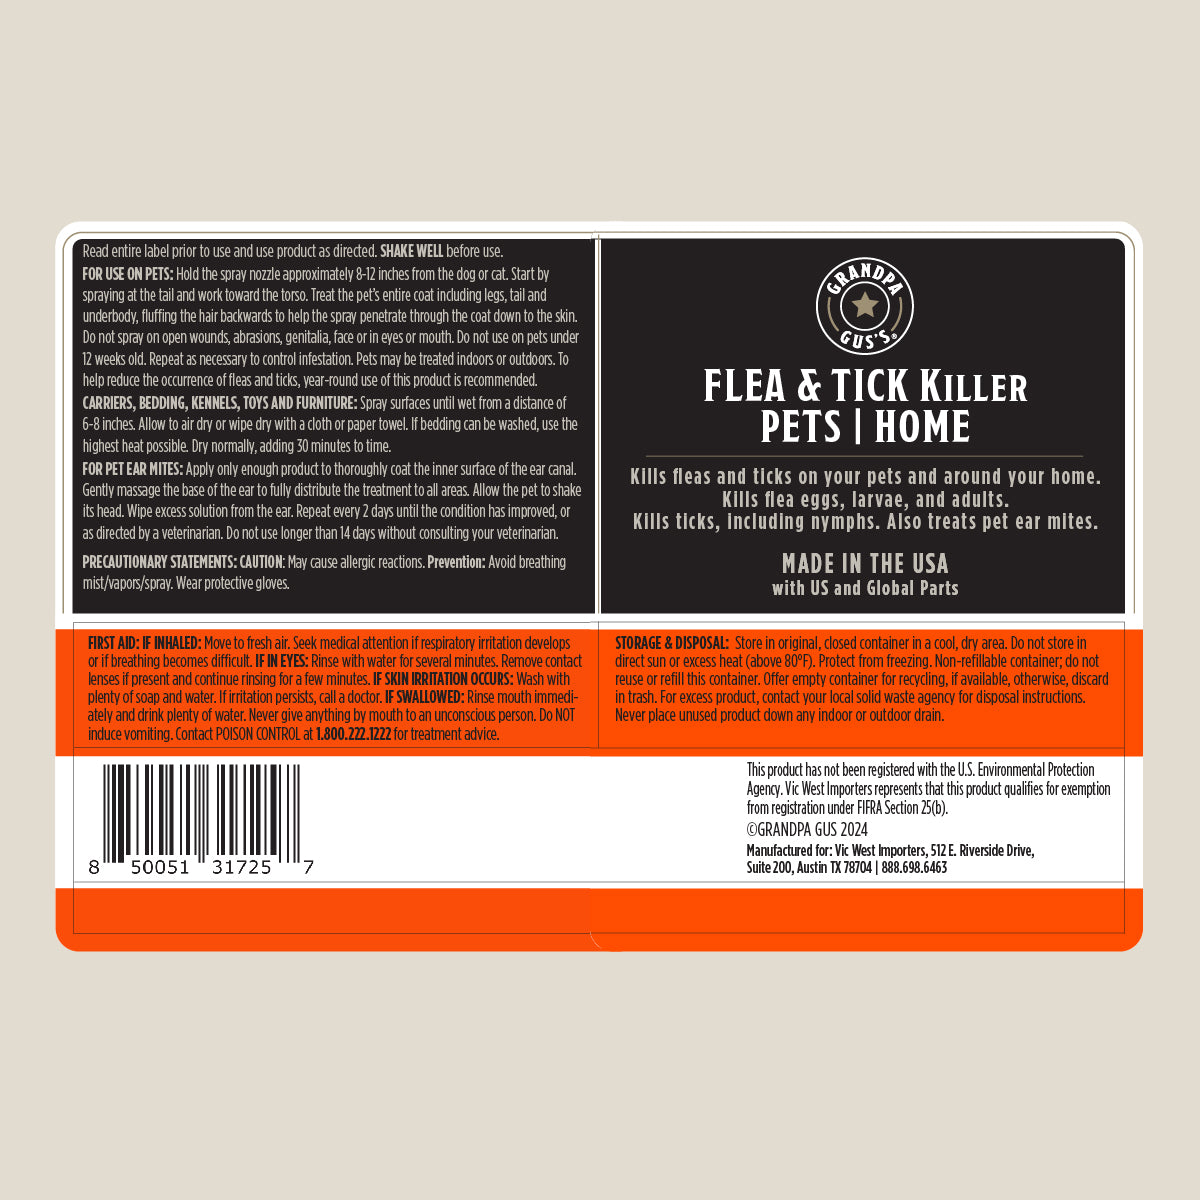 Flea & Tick Killer Spray for Pets & Home